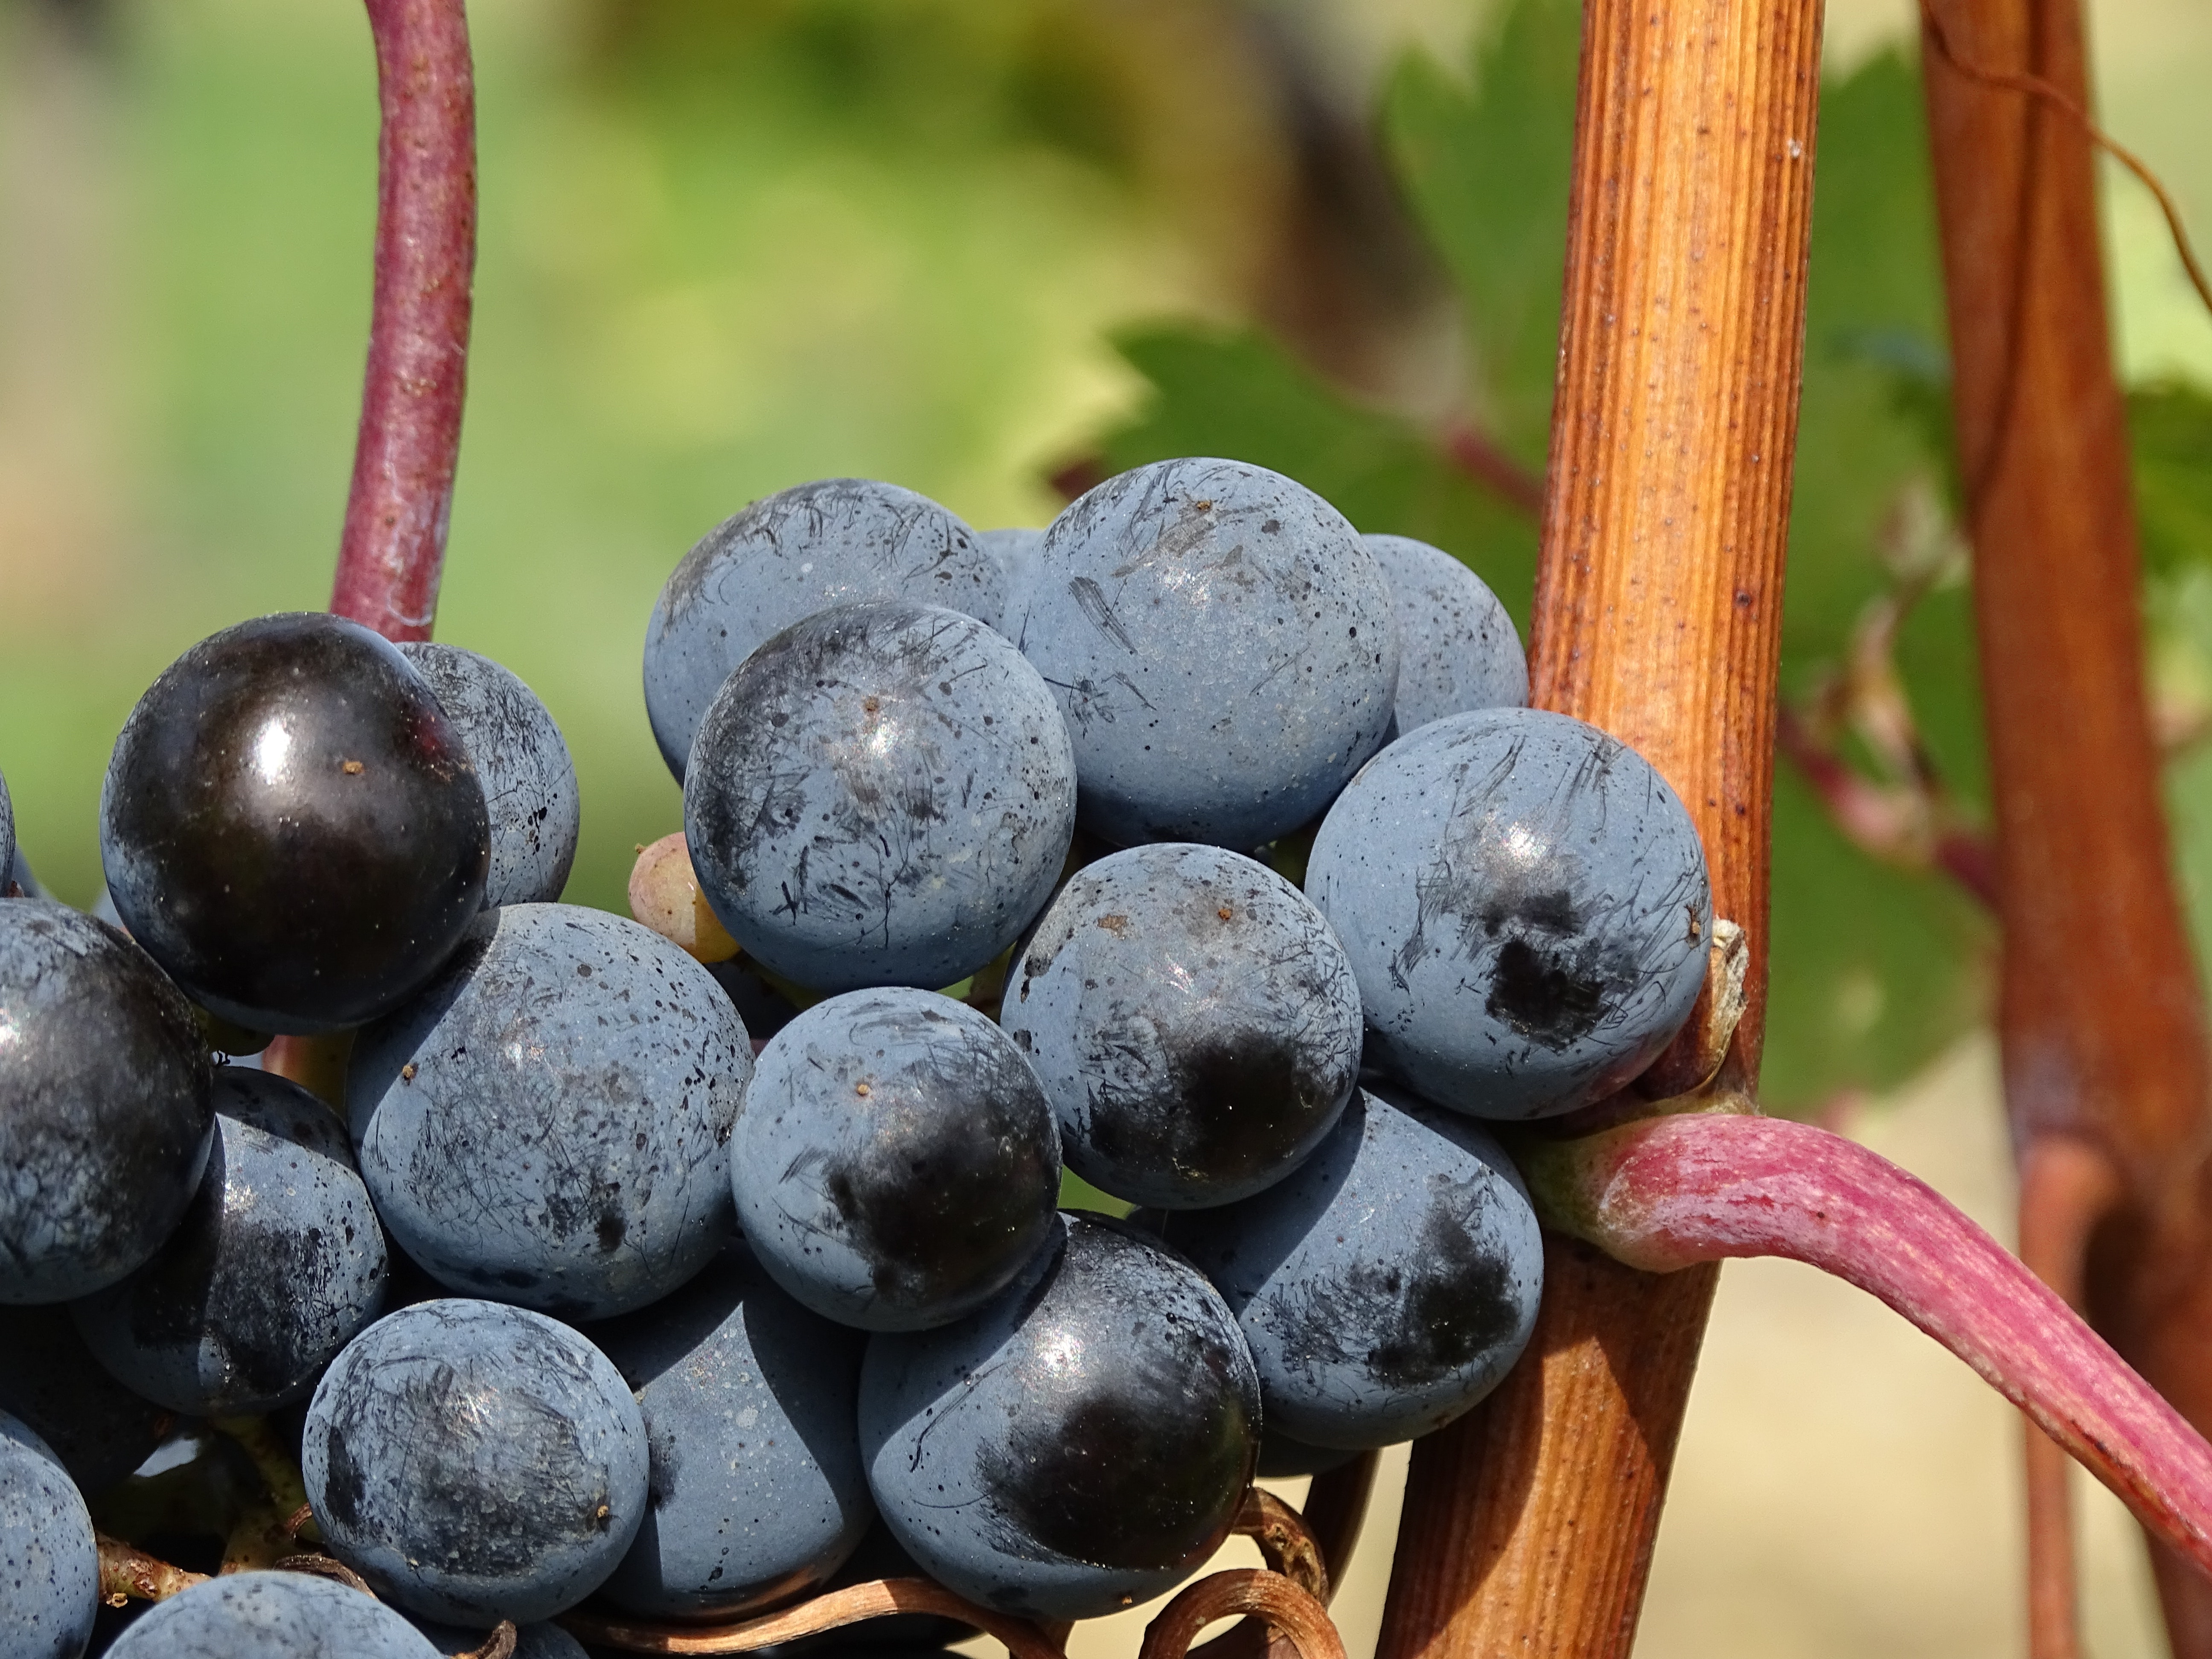 Ripe grapes during daytime photo